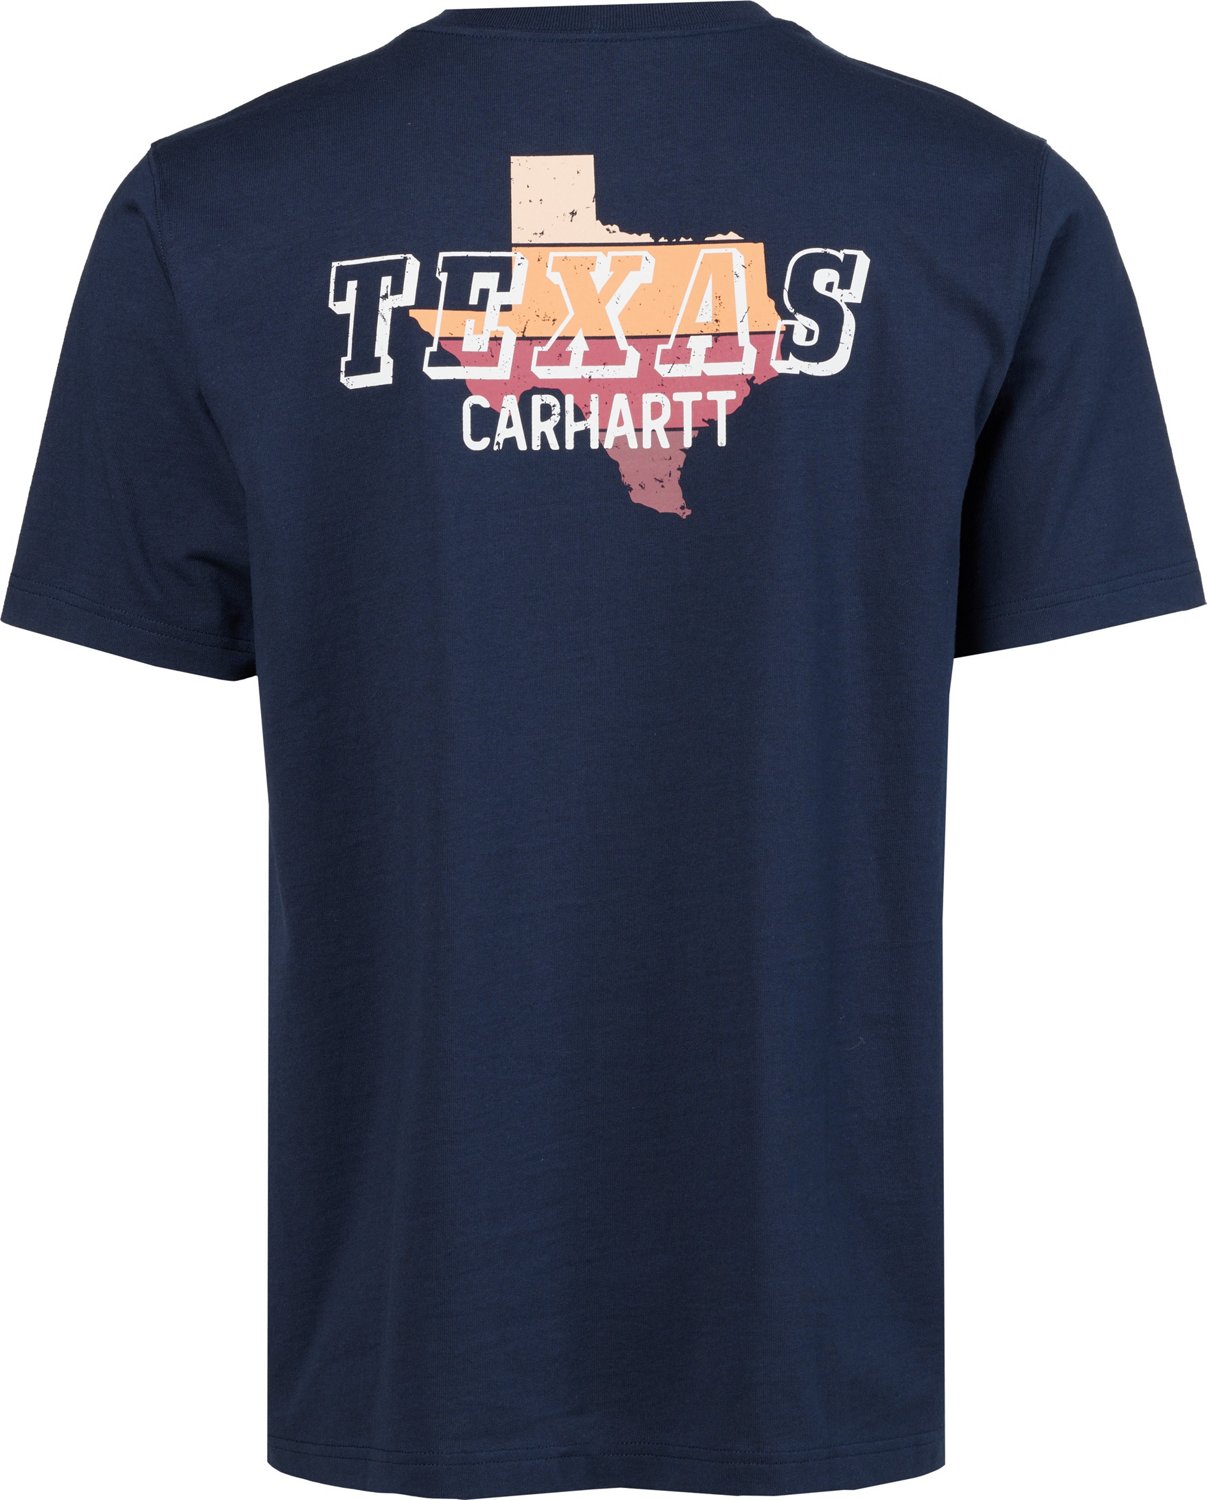 Carhartt Mens Relaxed Fit Heavyweight Pocket Texas Graphic T-shirt